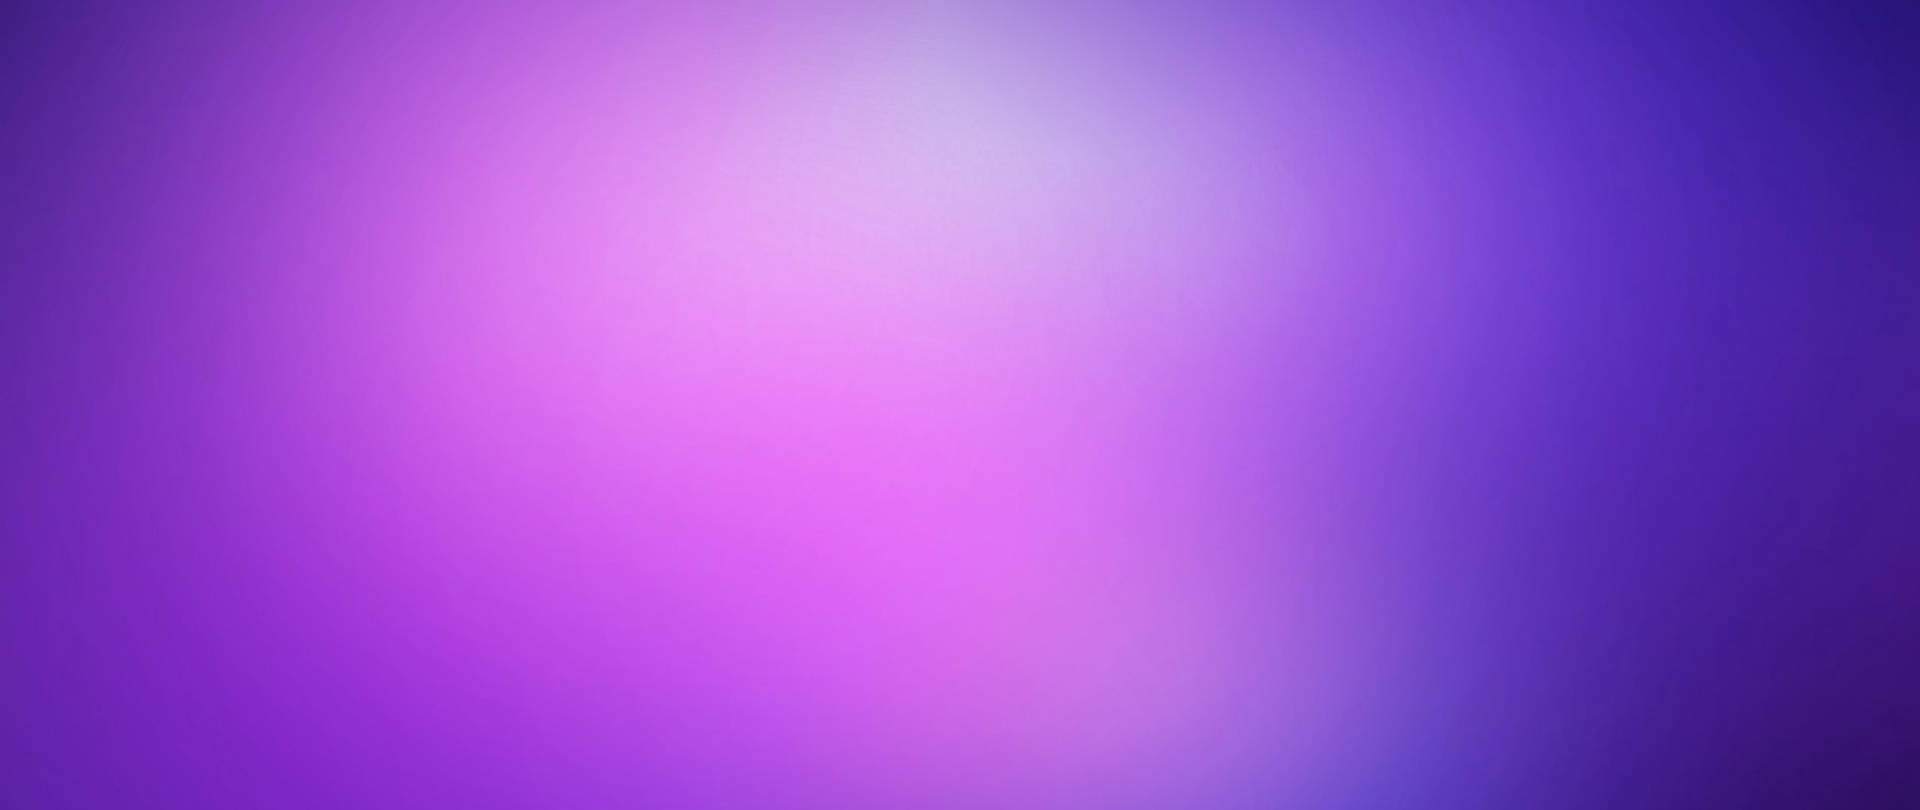 Free Purple Wallpaper Downloads, [1100+] Purple Wallpapers for FREE |  